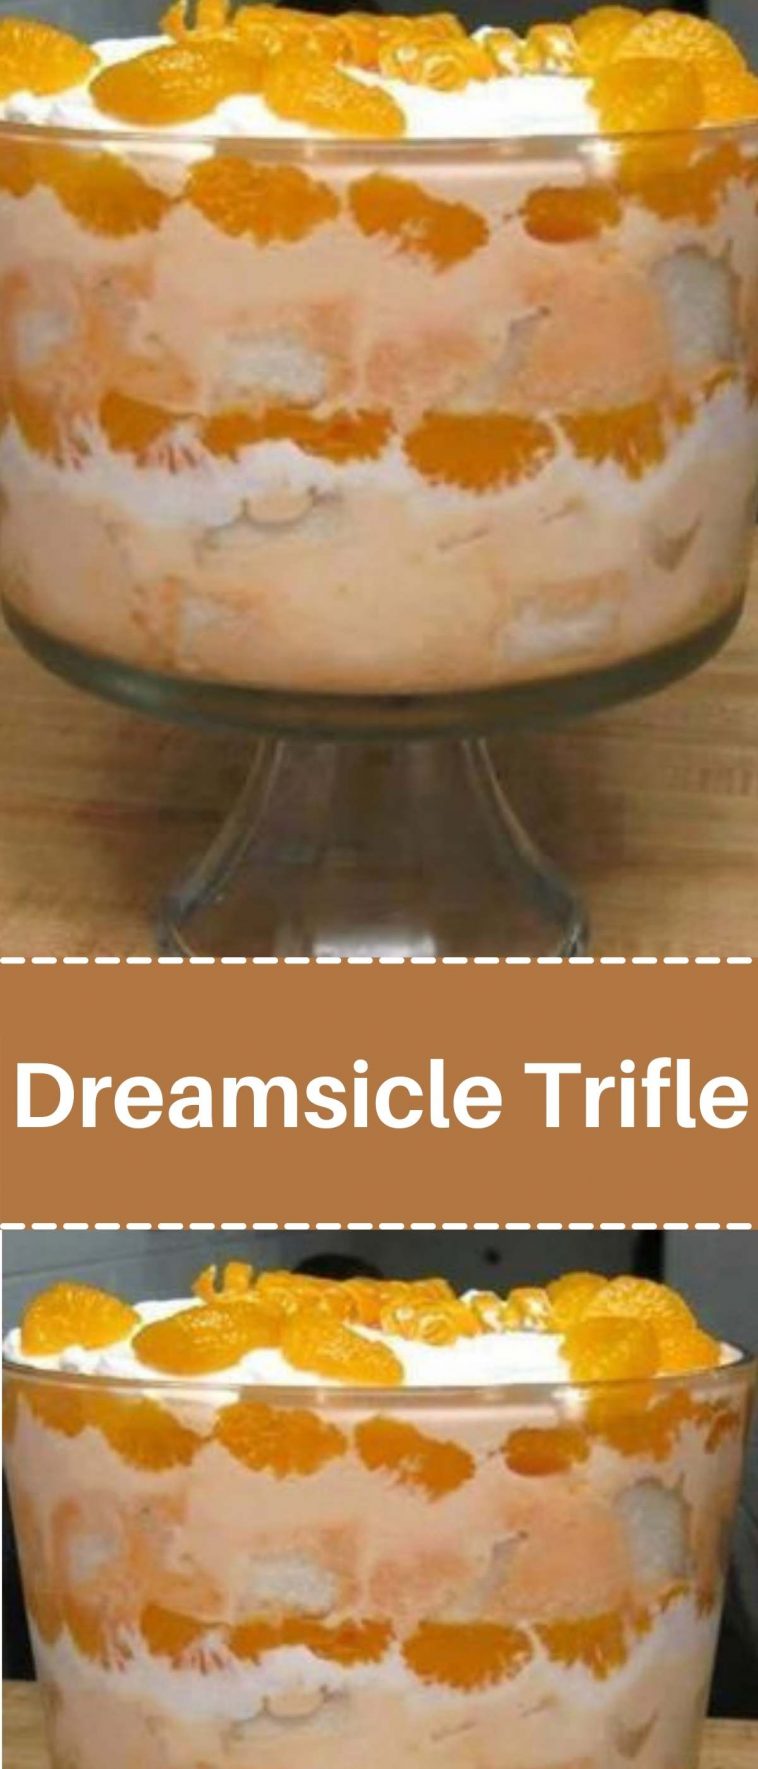 Dreamsicle Trifle